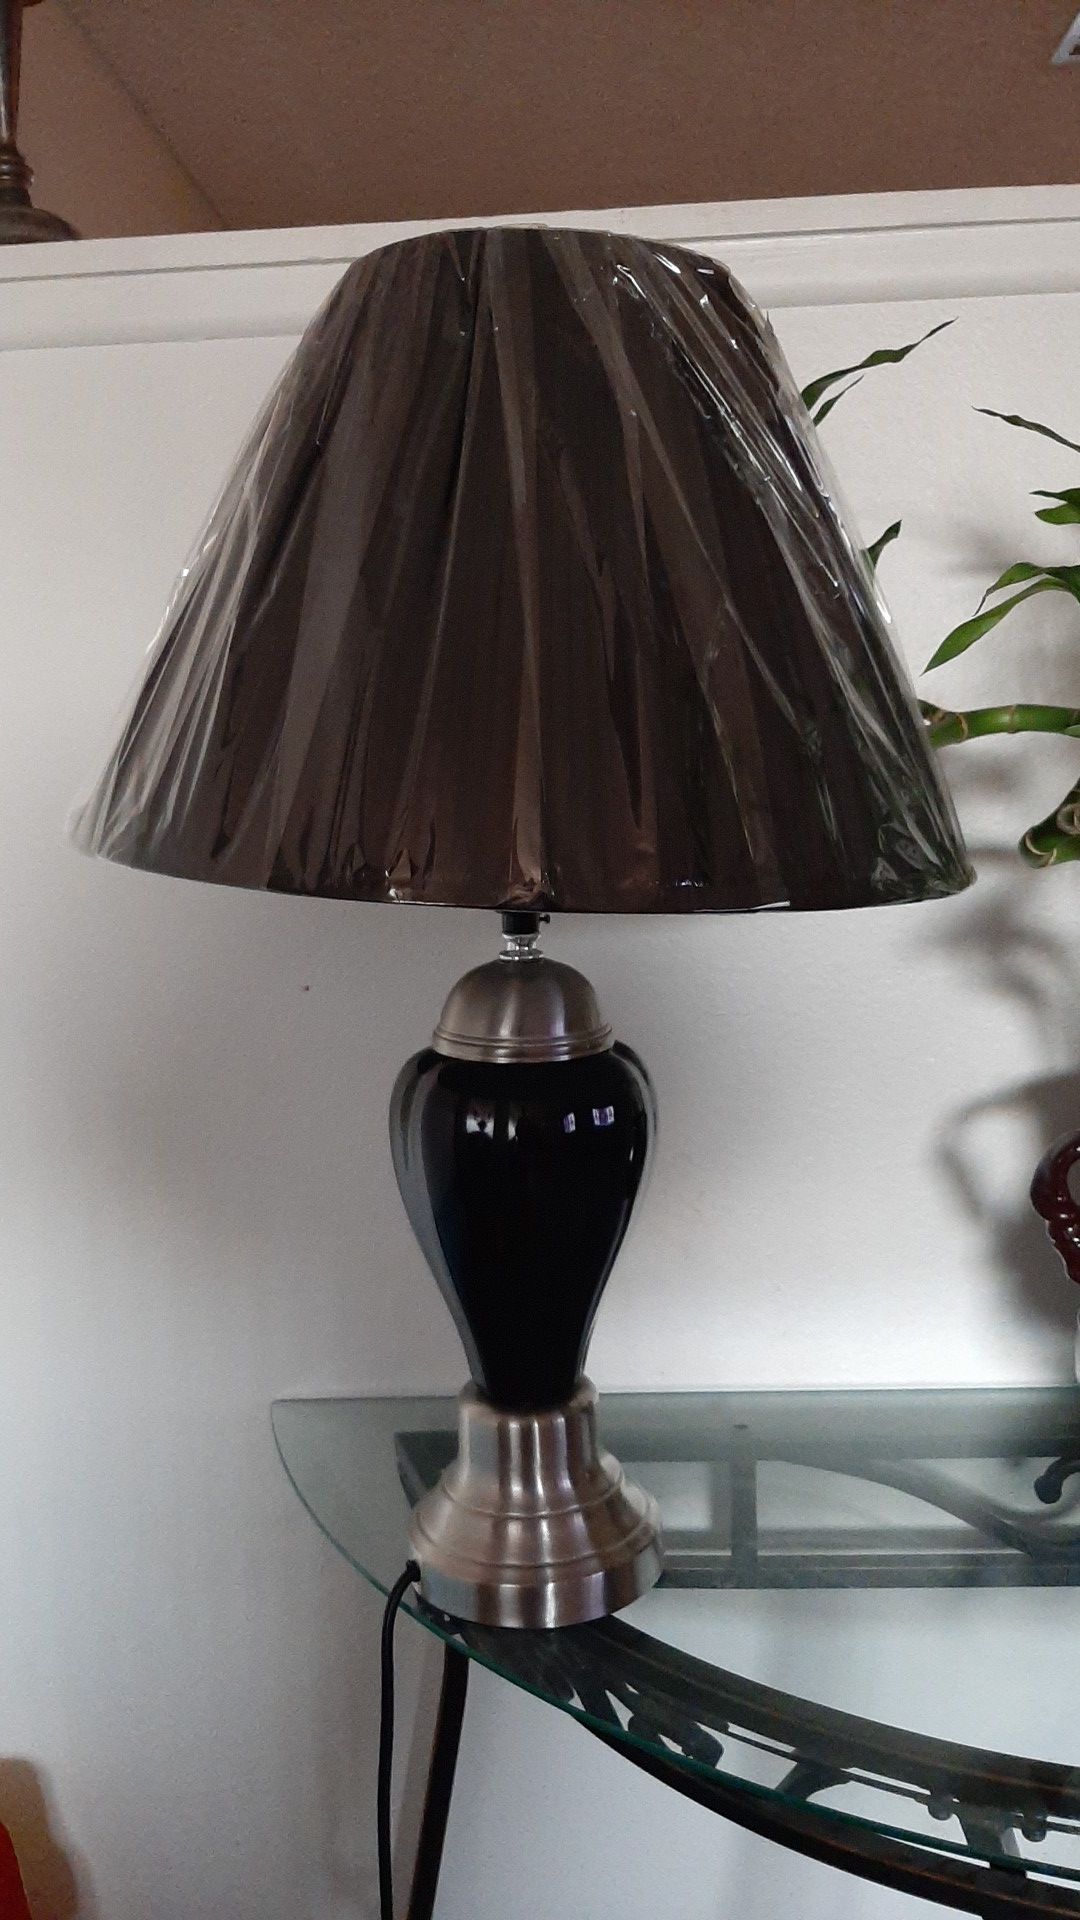 Brand new black lamp and lamp shade